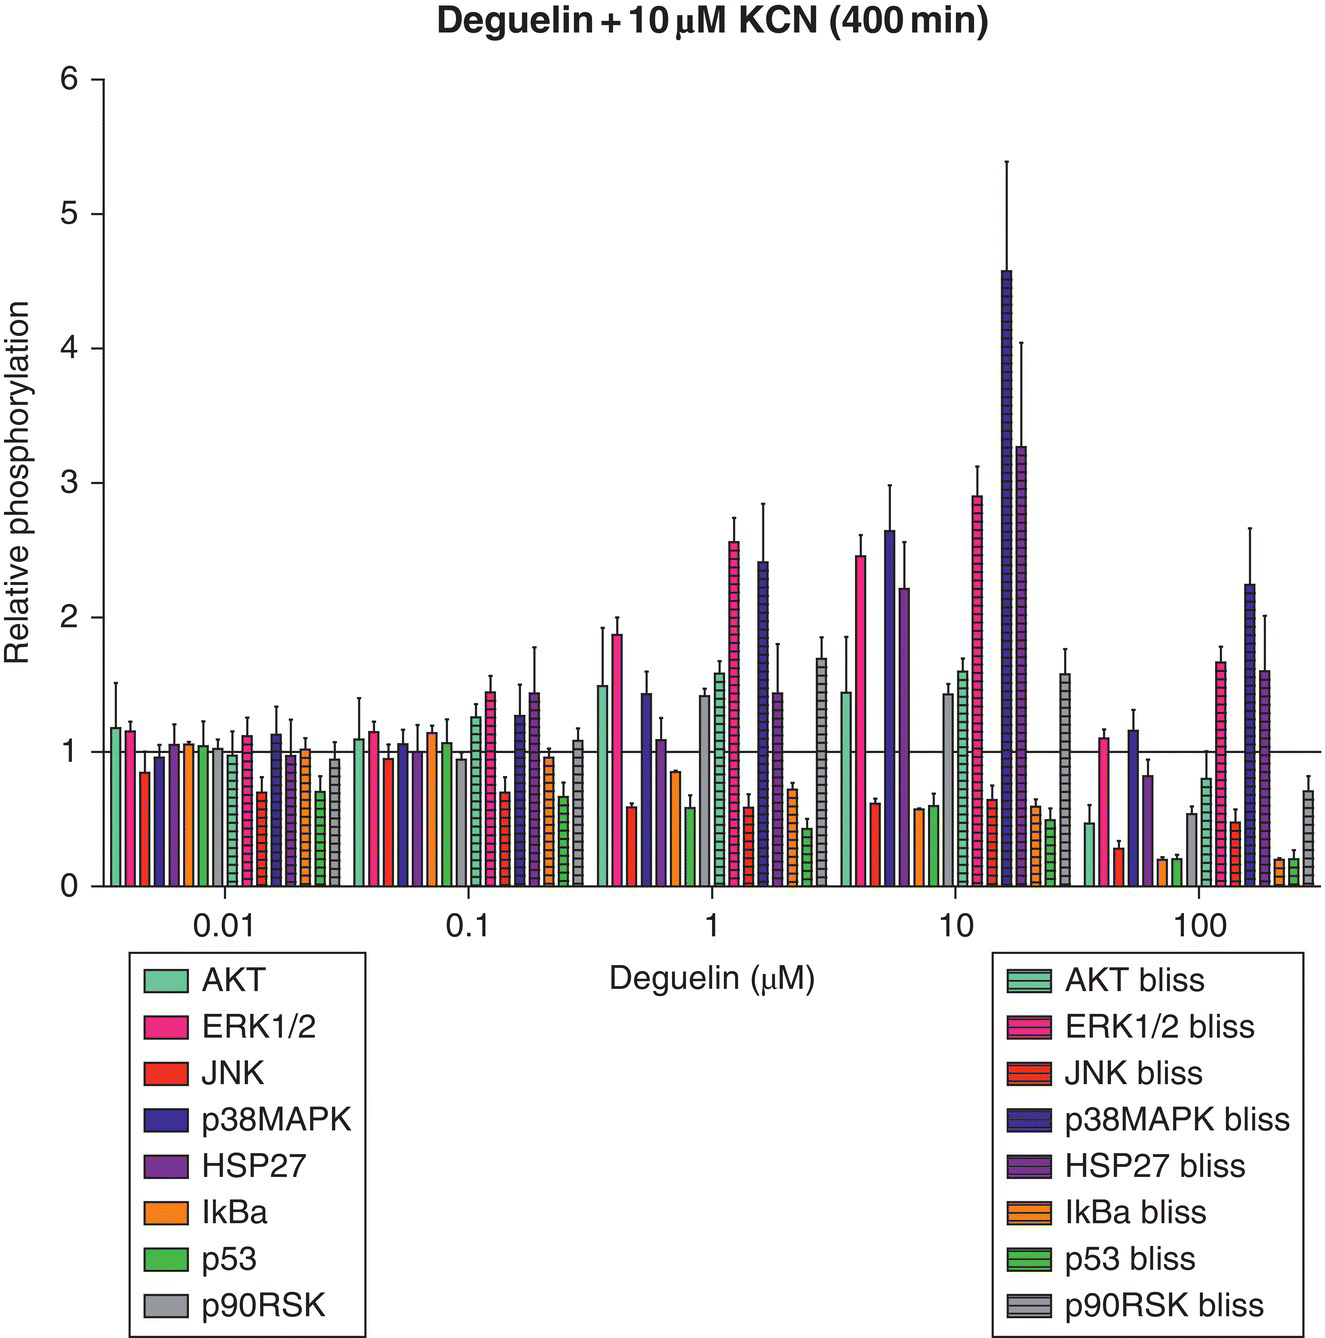 Graph for Deguelin+10 μM KCN (400 min) depicting a horizontal line at 1 and vertical bars representing for AKT, ERK1/2, JNK, p38MAPK, HSP27, IkBa, p53, p90RSK, AKT bliss, ERK1/2 bliss, JNK bliss, p38MAPK bliss, etc.